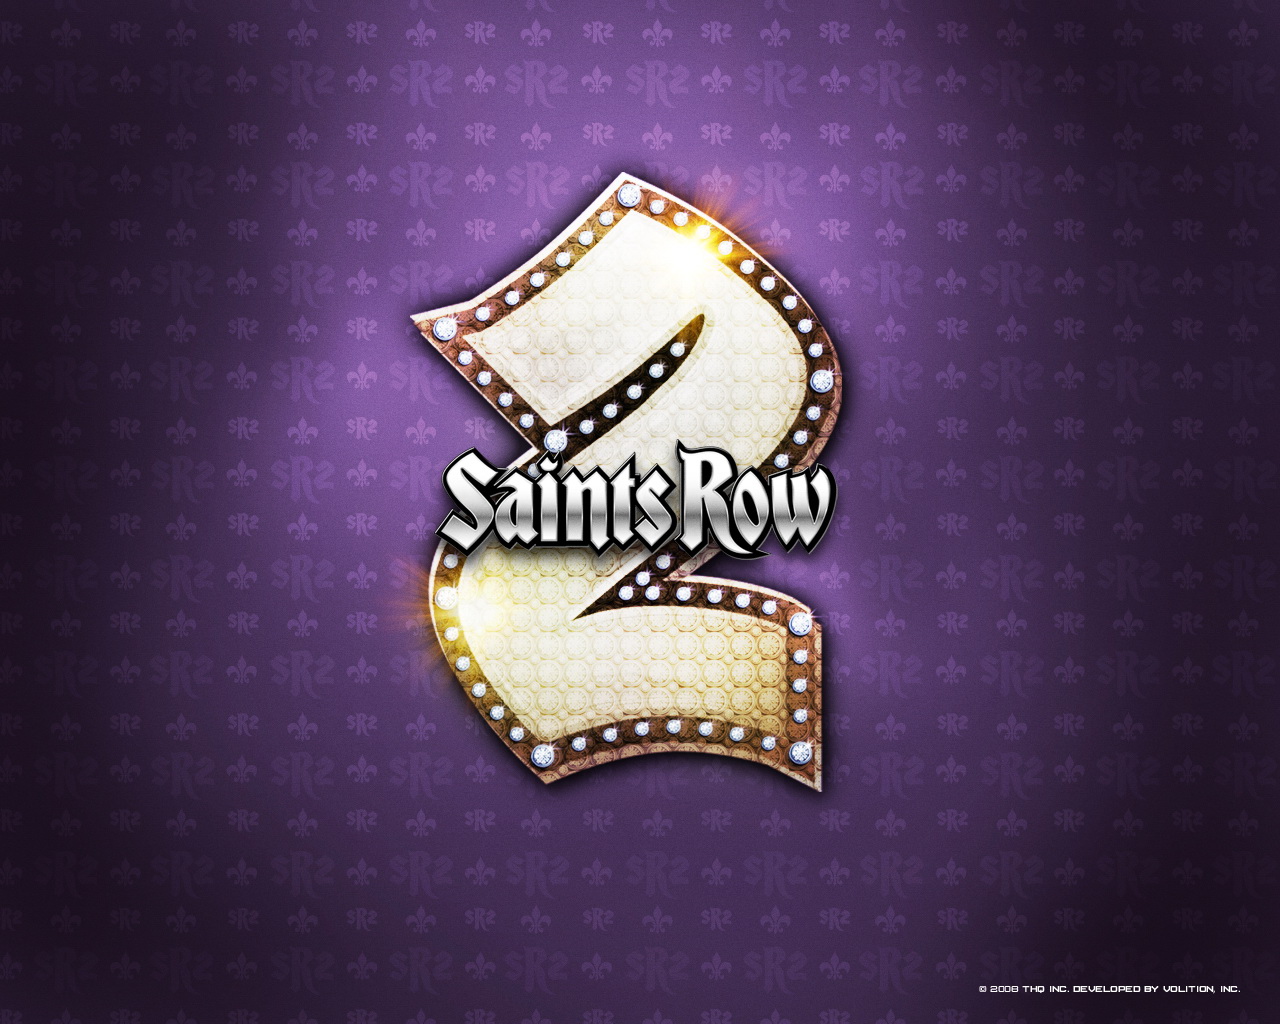 Saints Row 2 - Wallpaper Gallery